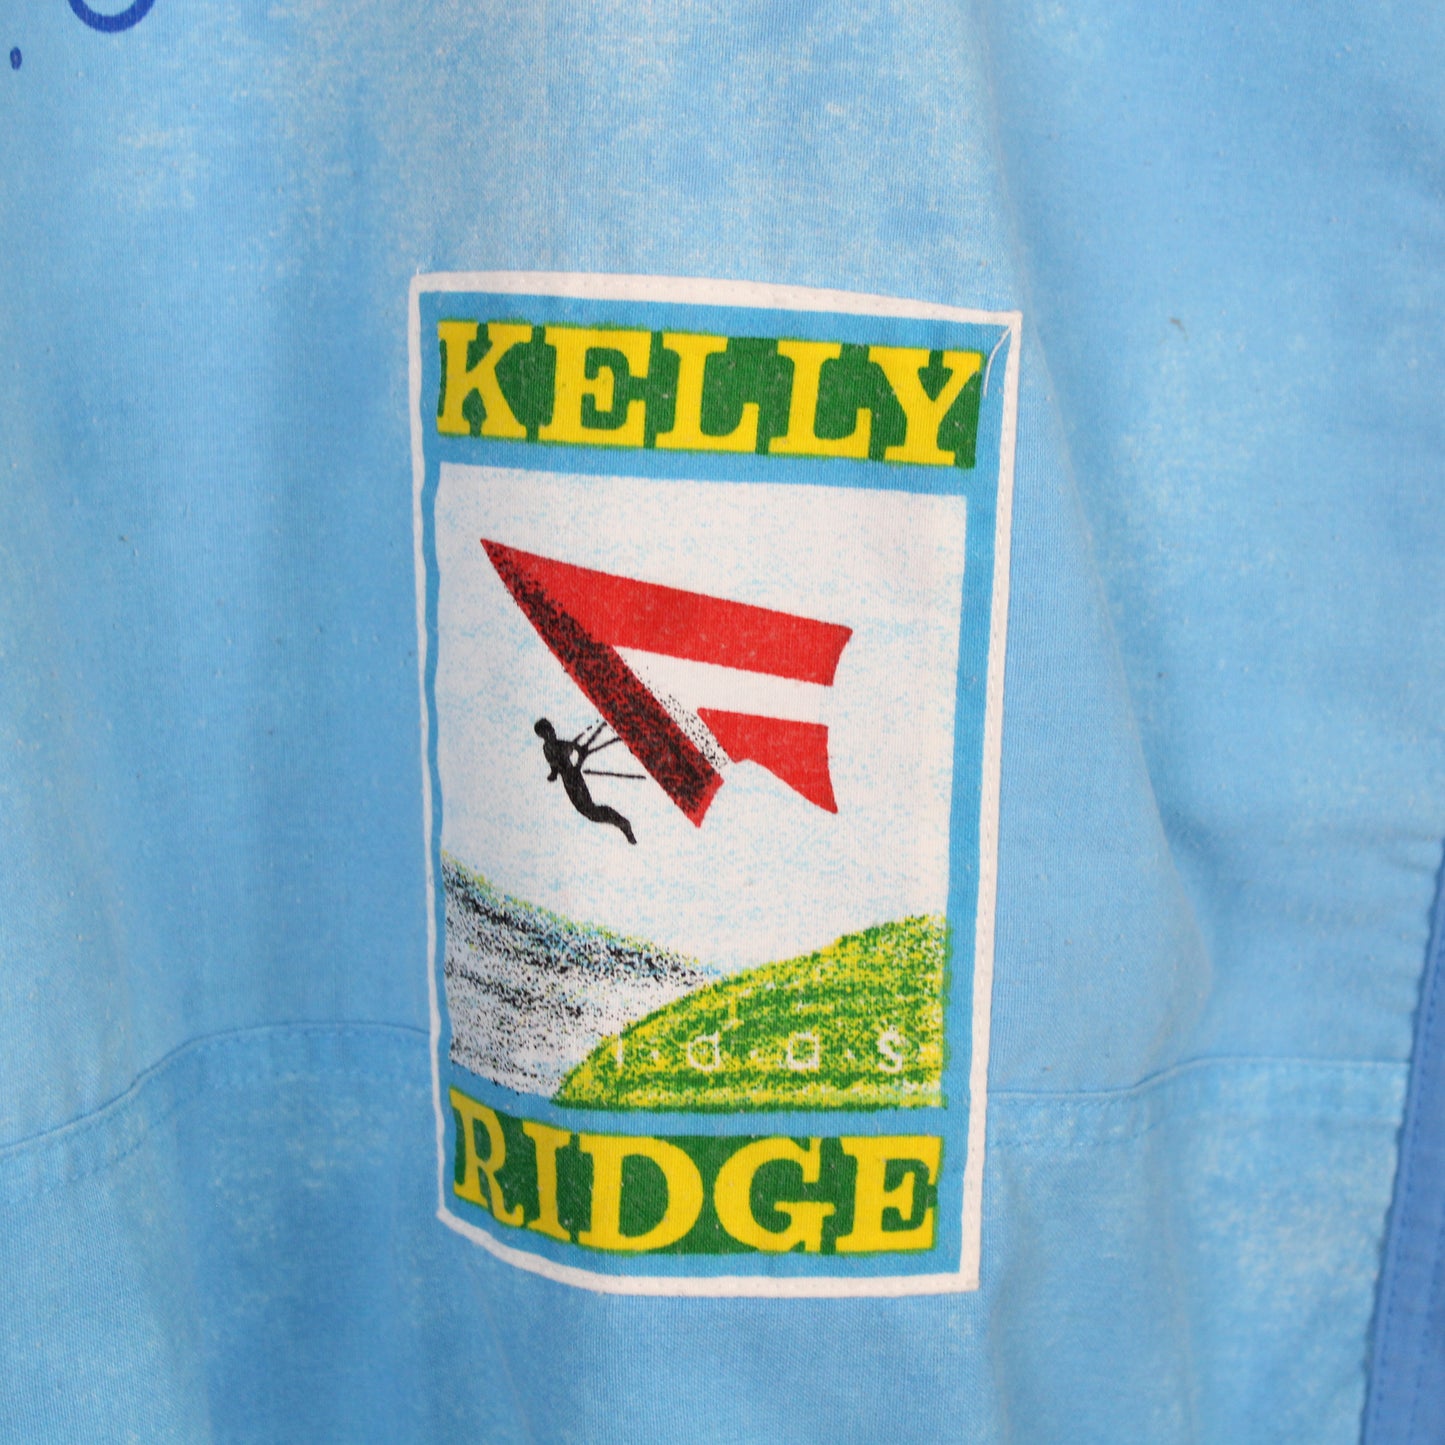 Vintage 80's Adidas Kelly Ridge T'Rose Flyers Sweatshirt - L